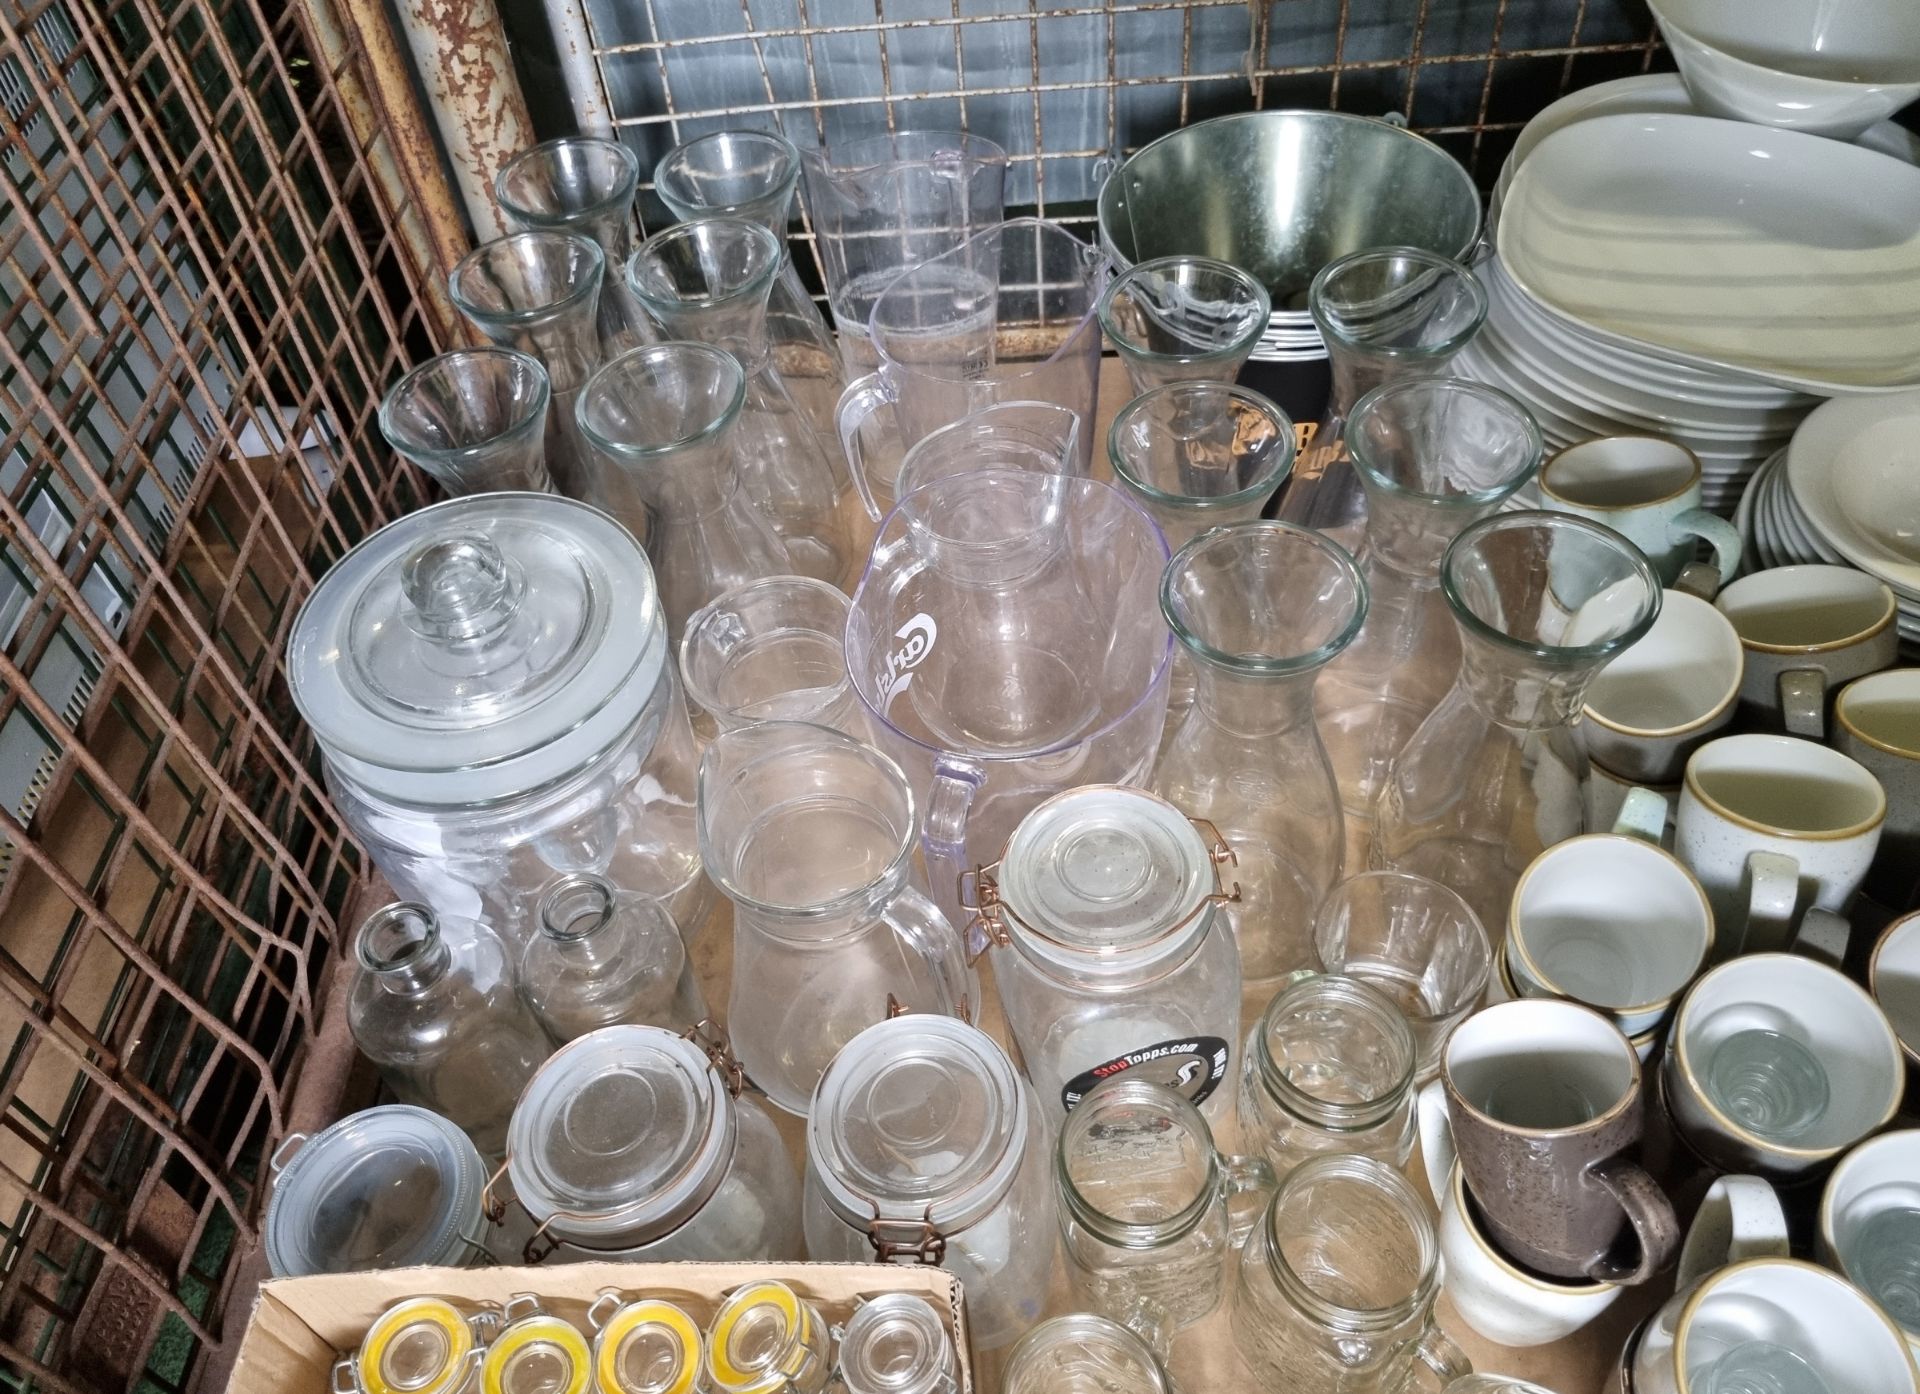 Tableware & glassware - plates, saucers, masonry glasses, jugs & shot glasses - Image 5 of 5